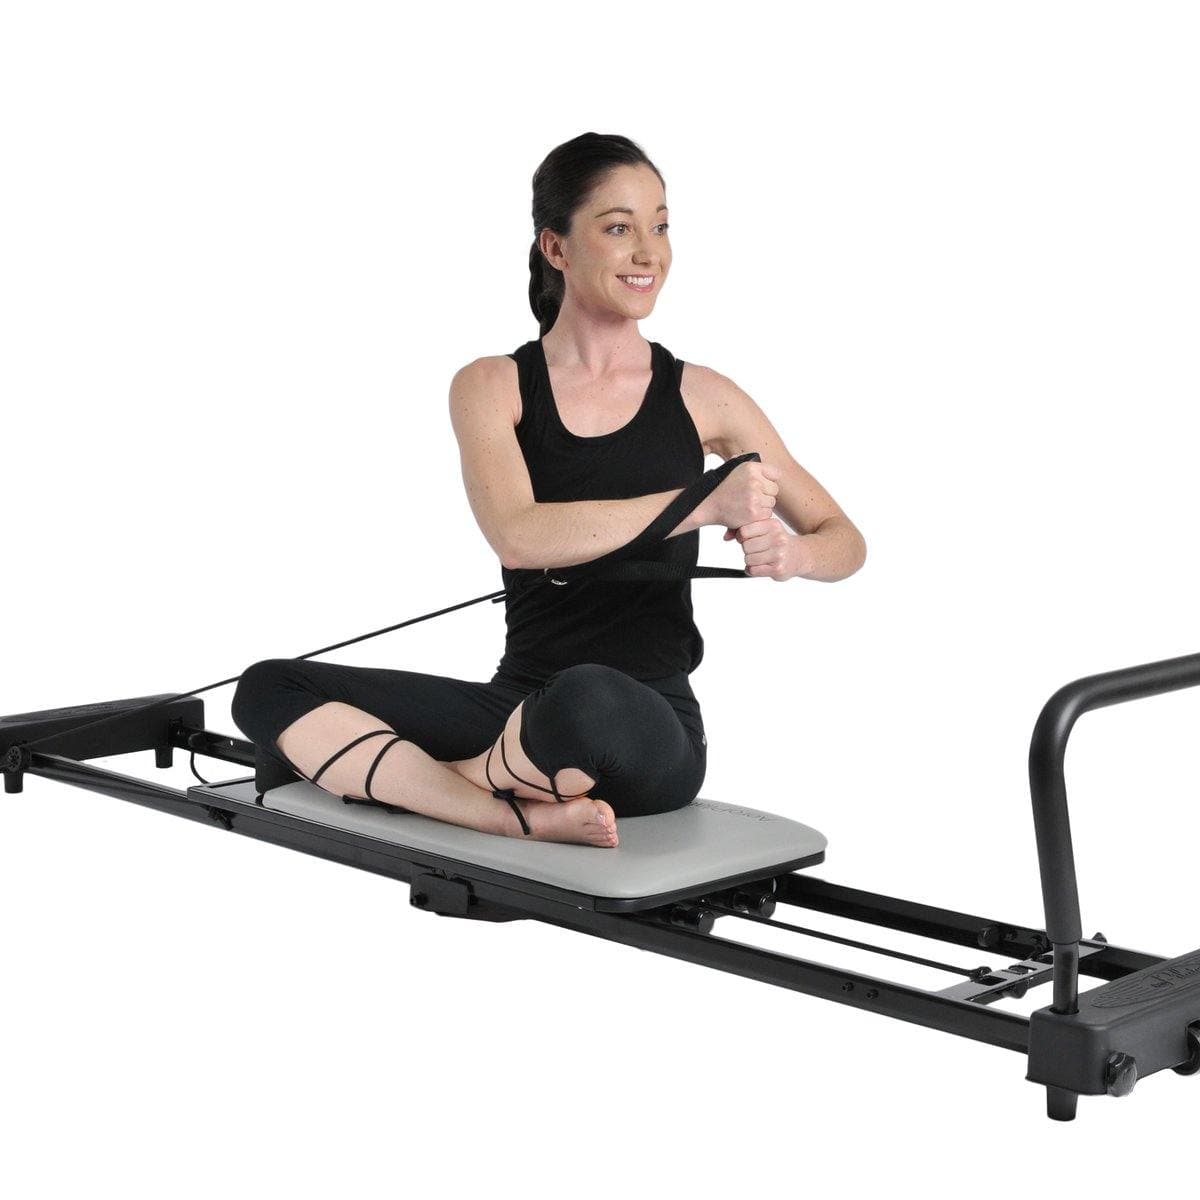 Strength & Conditioning: Pilates Jumpboard & Reformer DVD